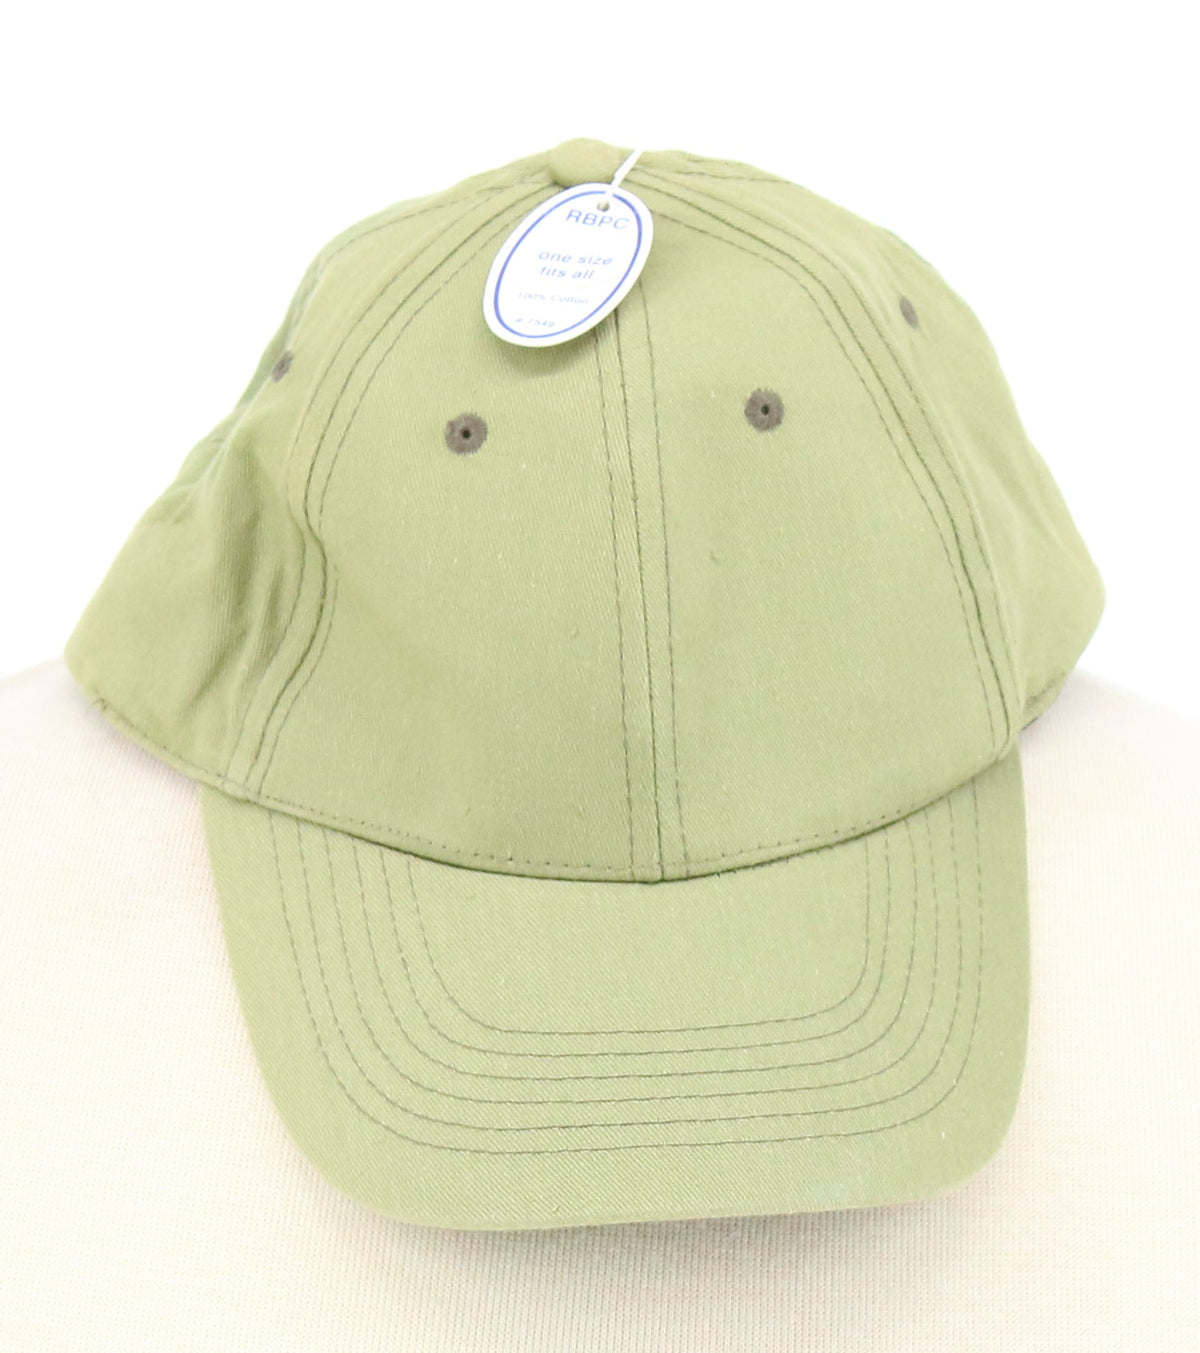 RBPC Olive Green Cotton Cap